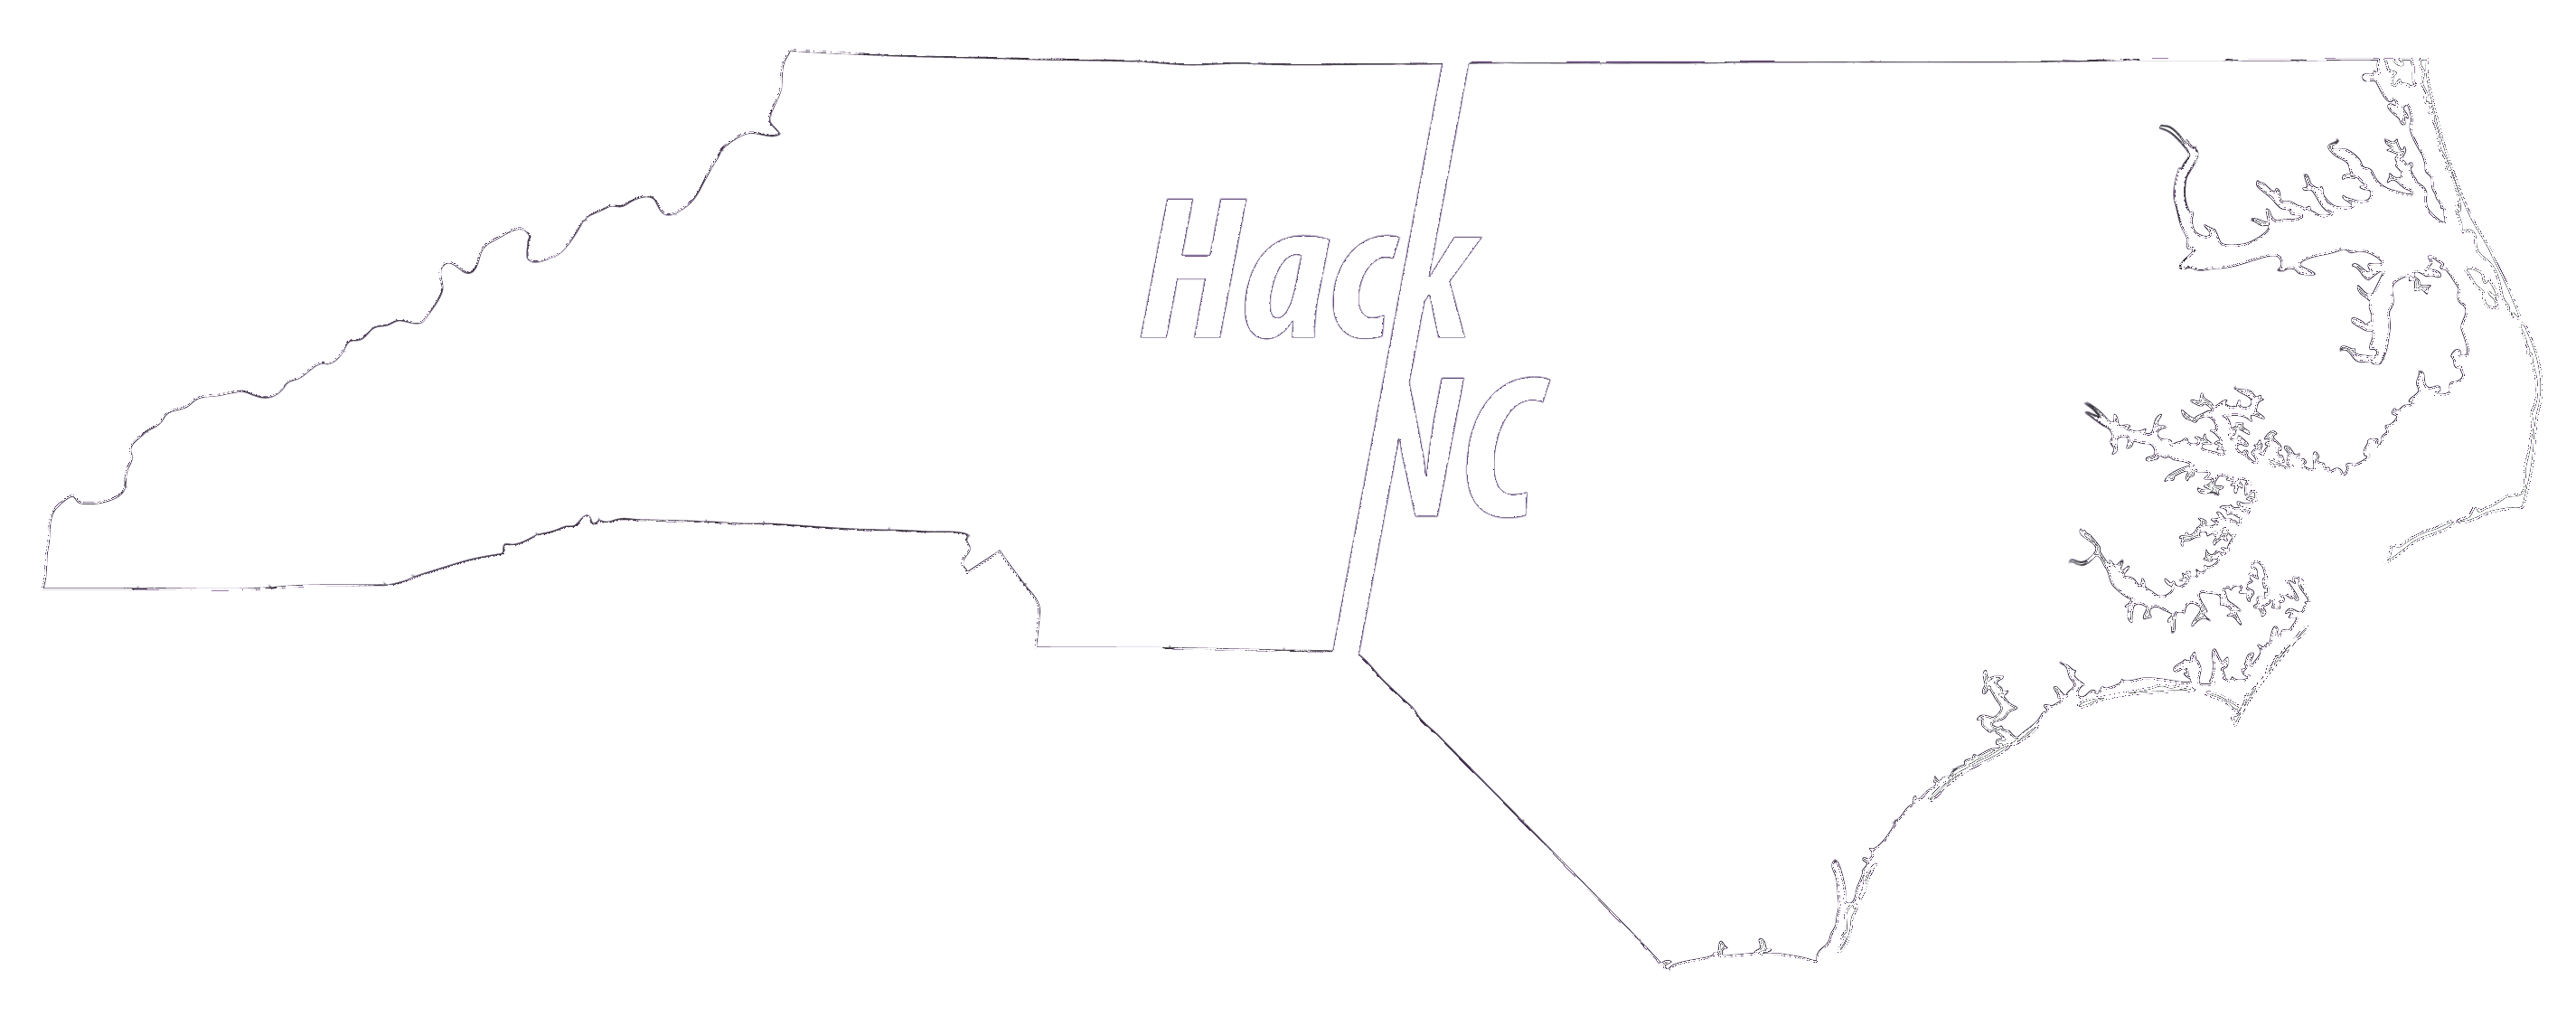 hacknc logo